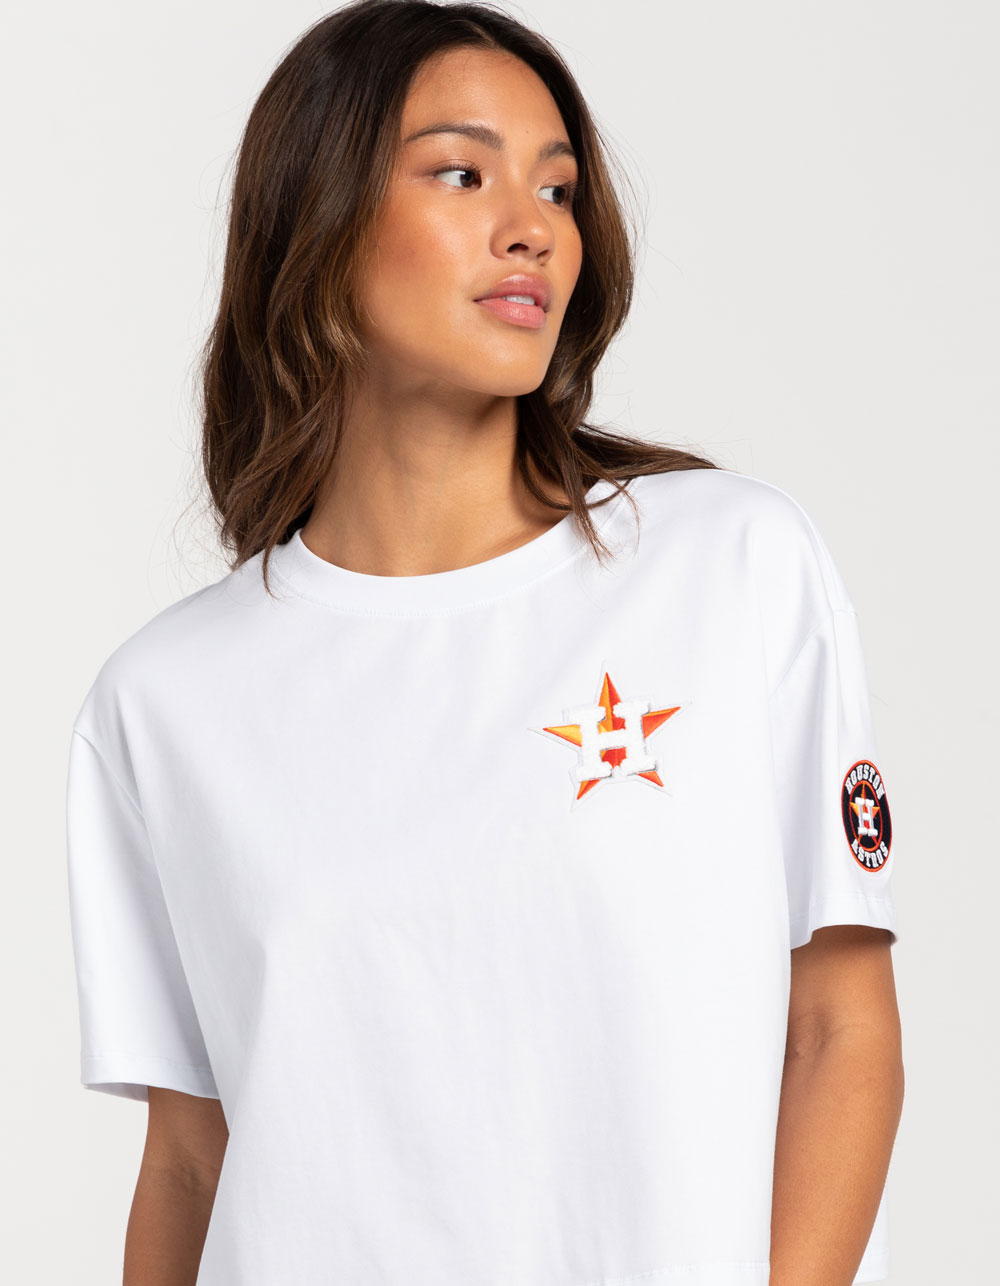 Nike Team First (MLB Houston Astros) Women's Cropped T-Shirt